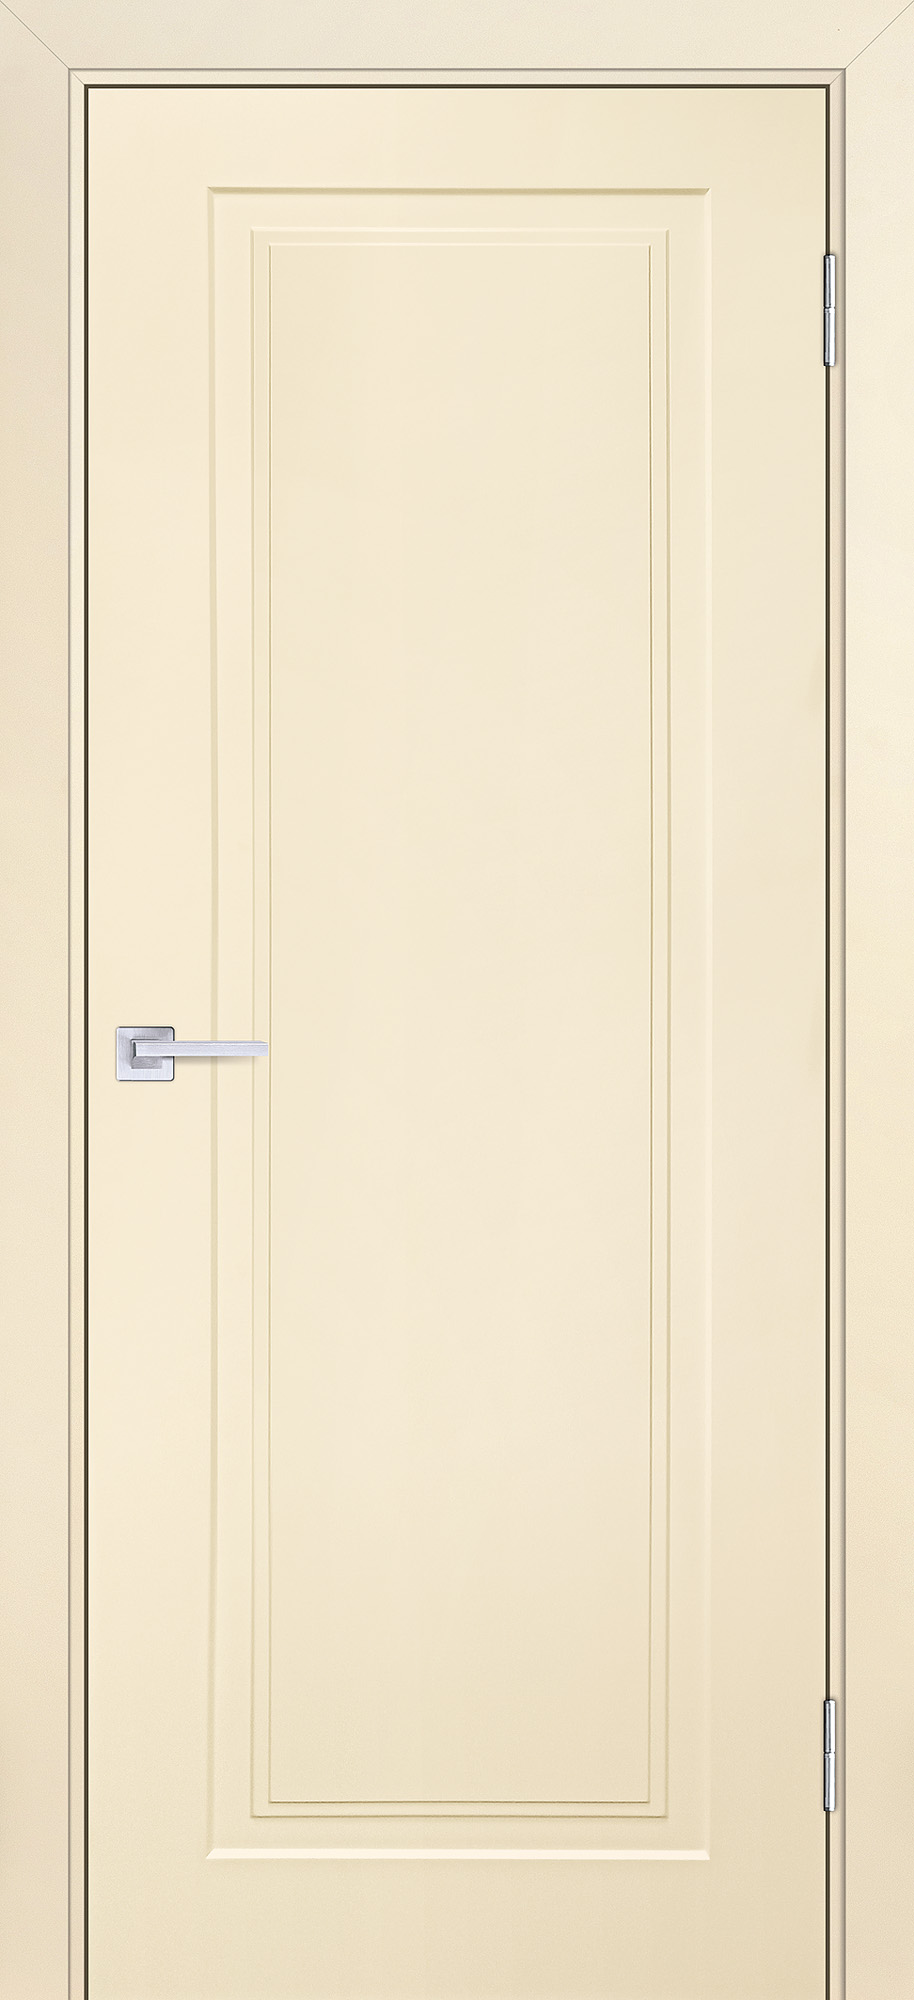 Двери крашеные (Эмаль) ТЕКОНА Смальта-Лайн 06 глухое Айвори ral 1013 размер 190 х 55 см. артикул F0000093270